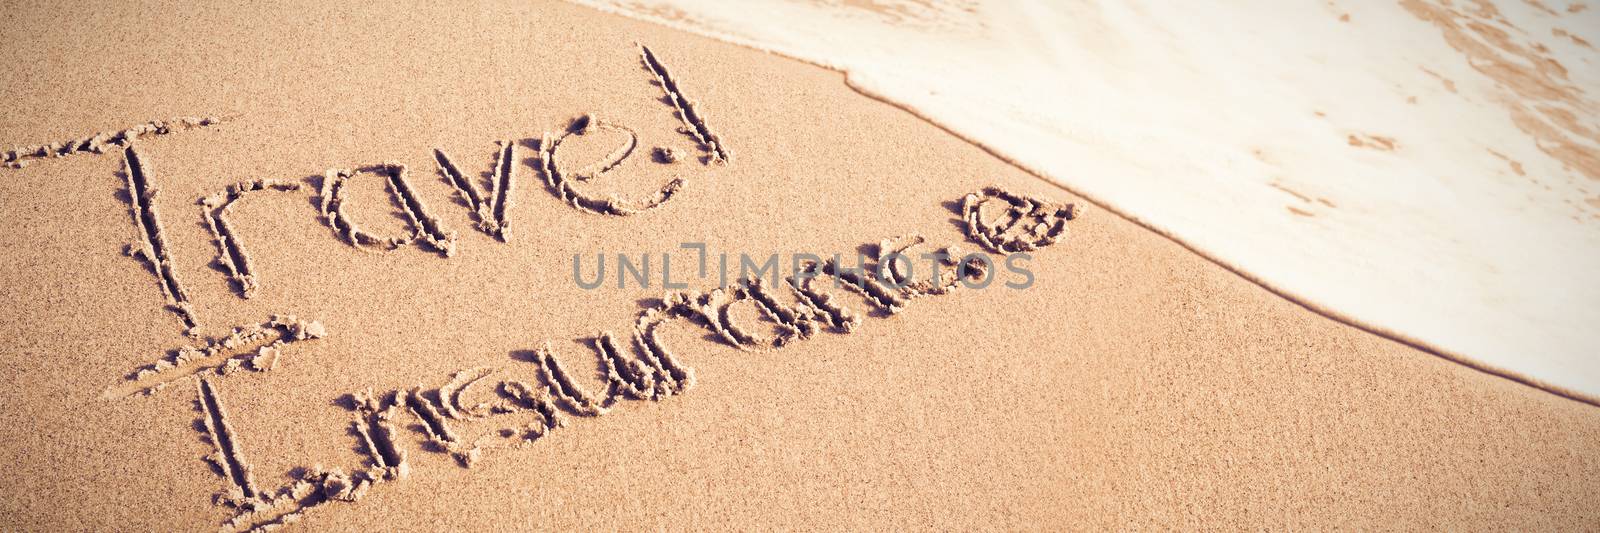 Travel Insurance text written on sand at beach